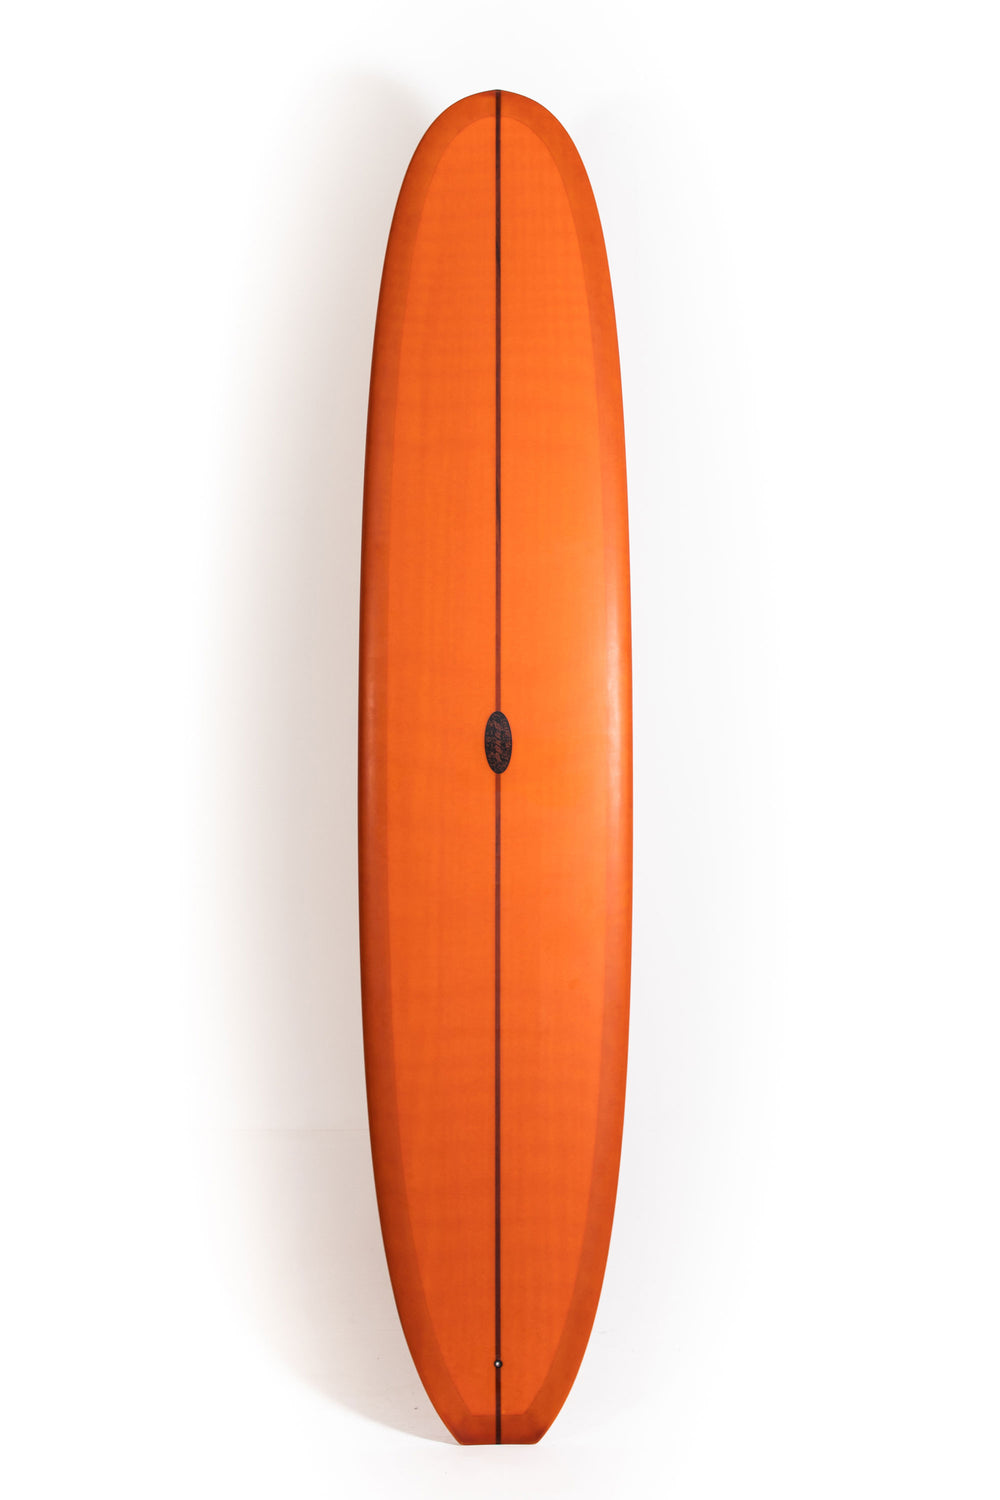 Pukas Surf Shop - Pukas Surfboards - MAYFLOWER by Axel Lorentz -  9'4